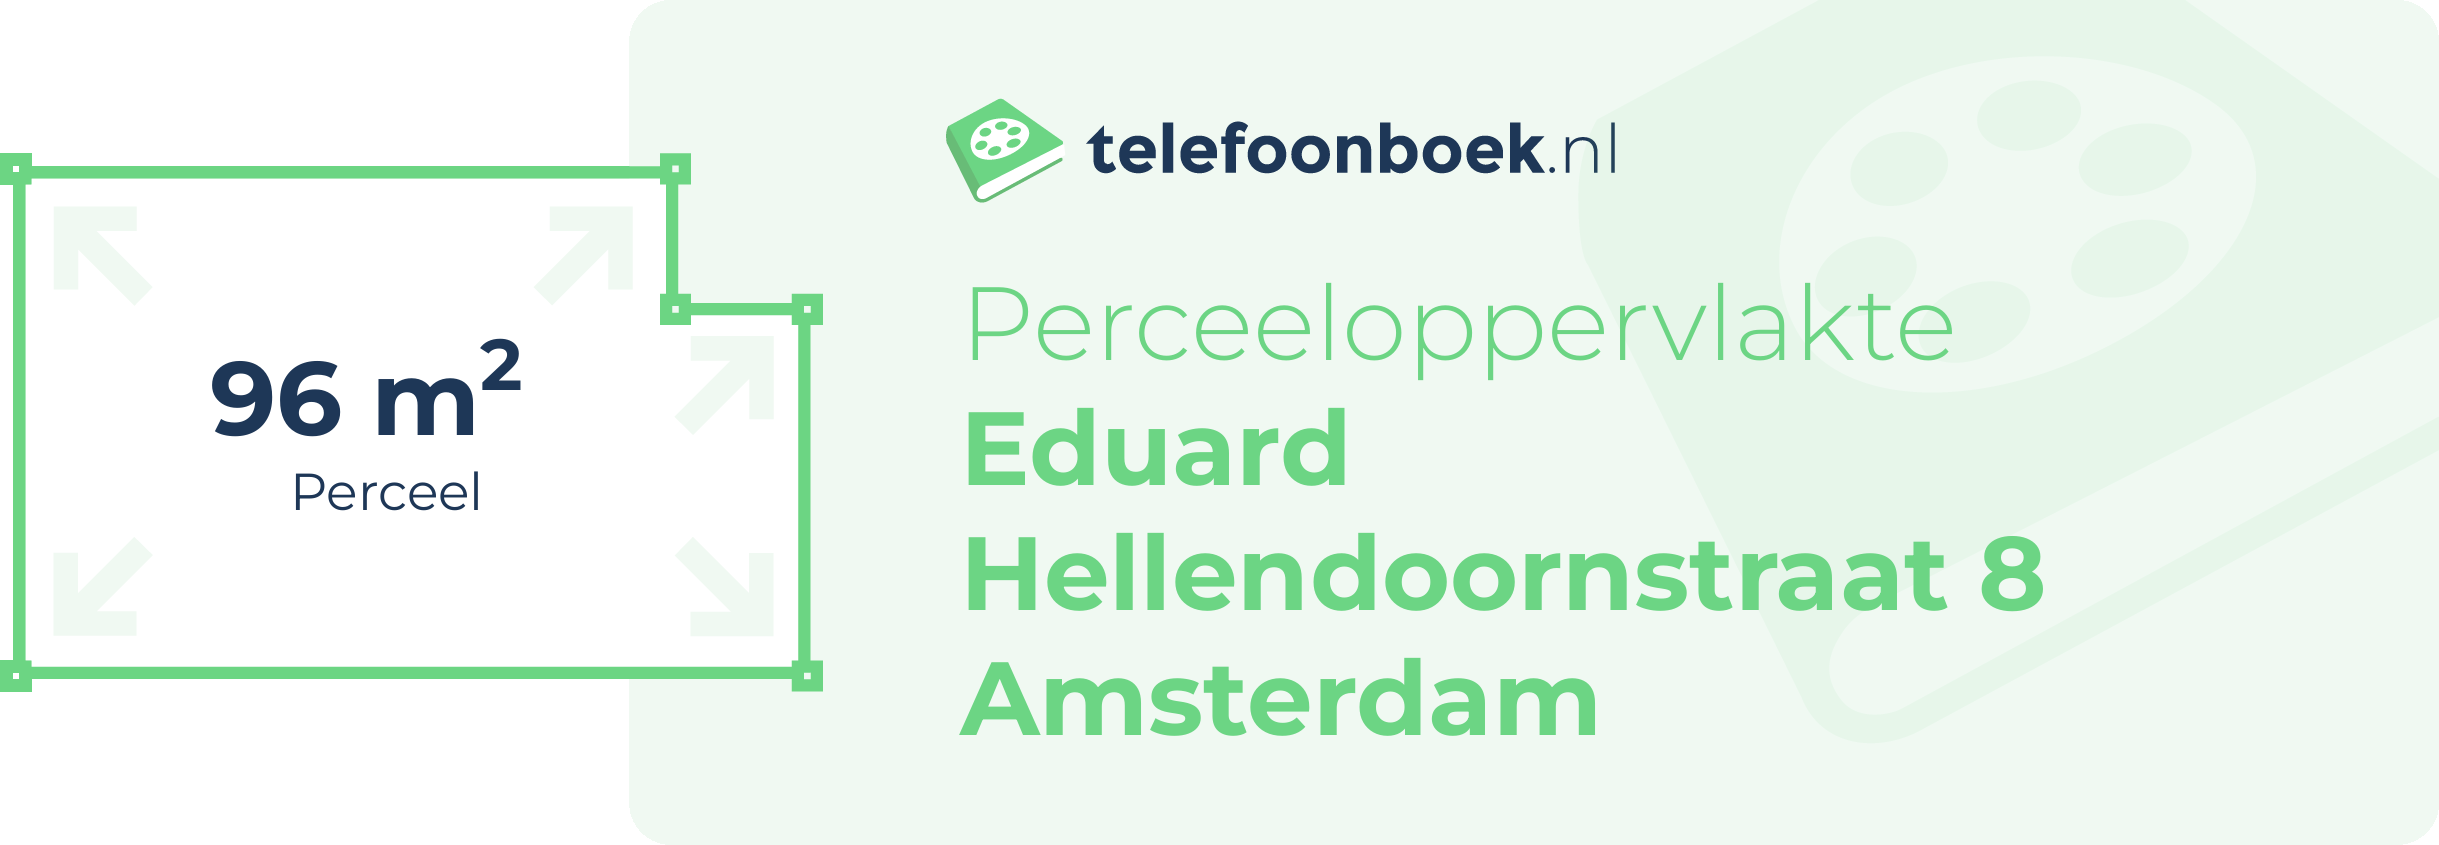 Perceeloppervlakte Eduard Hellendoornstraat 8 Amsterdam